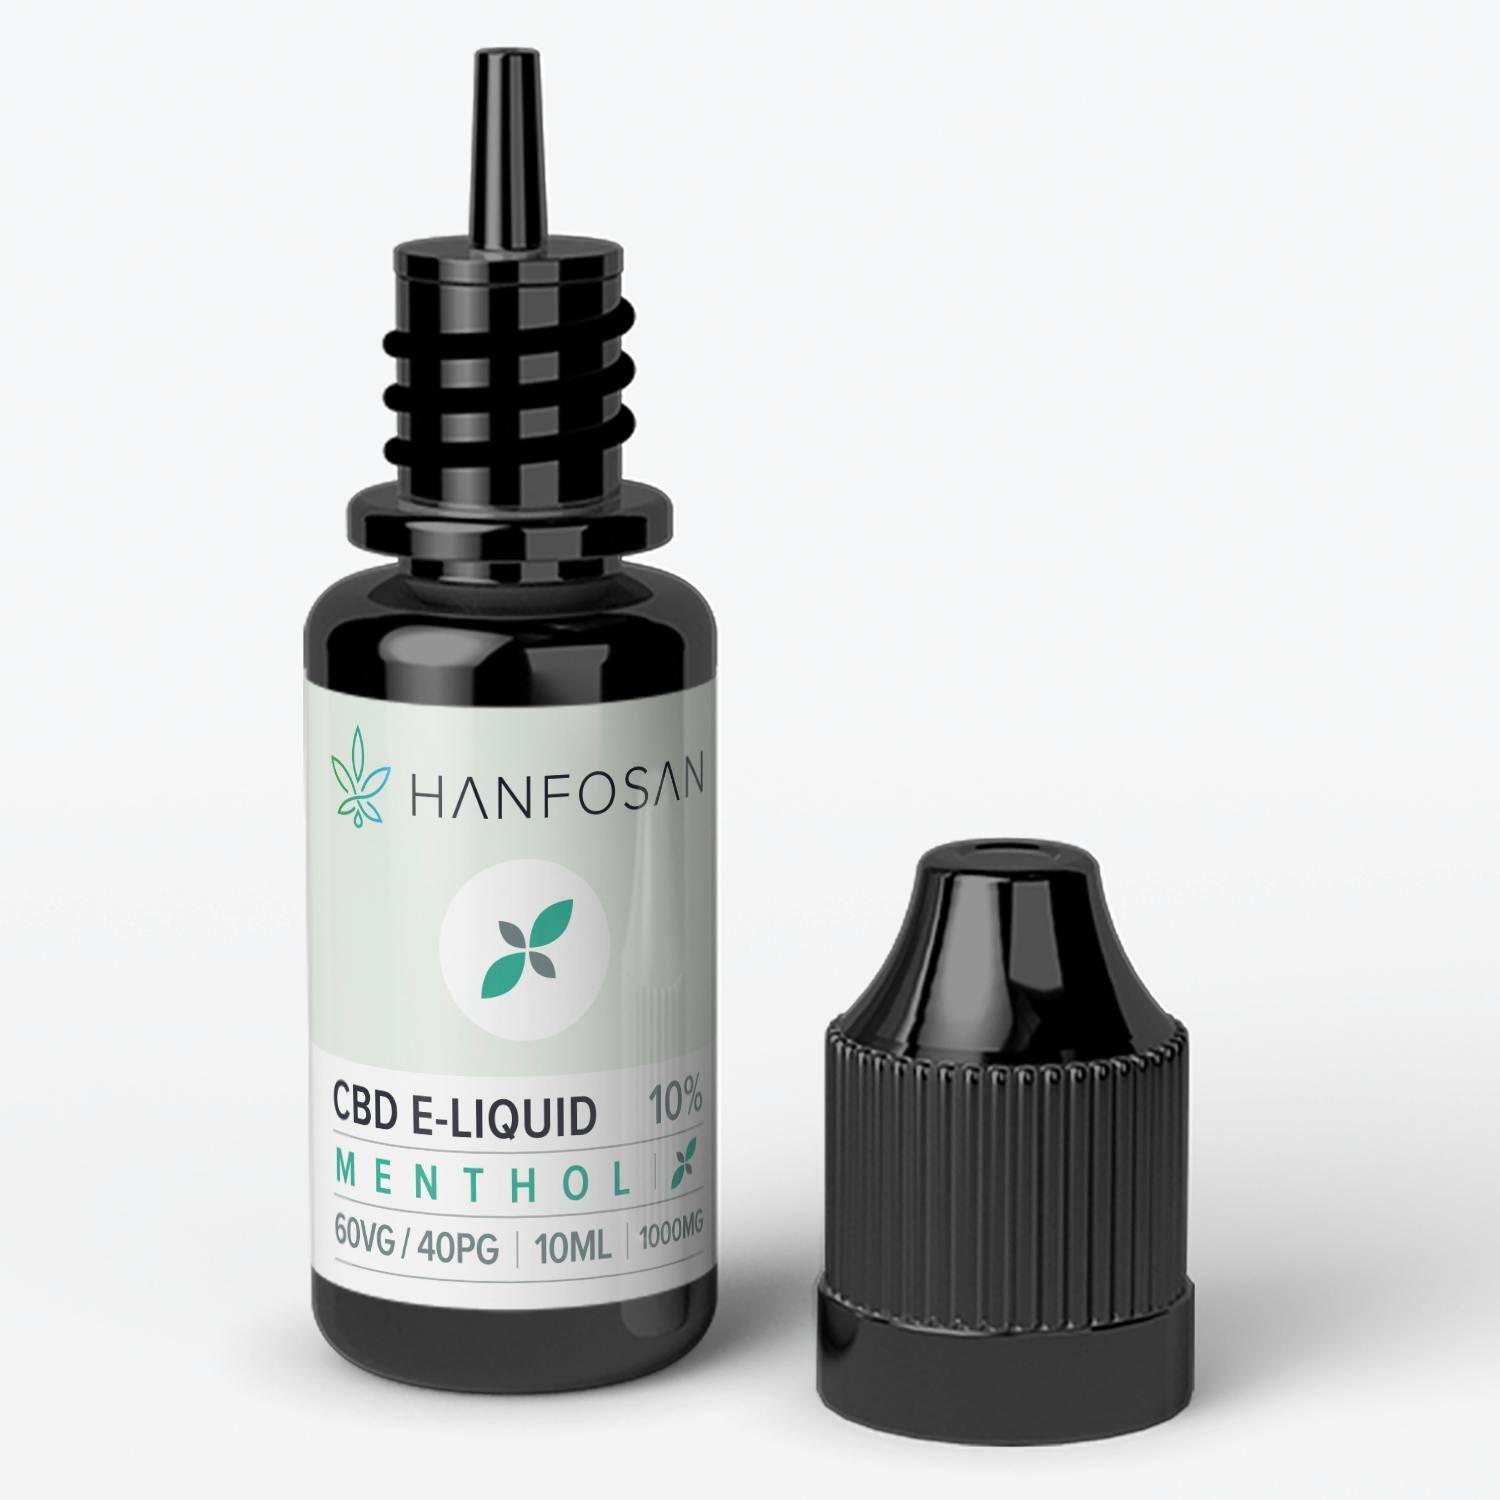 CBD E-Liquid Menthol 10% (1000mg) | CBD Liquid | Hanfosan